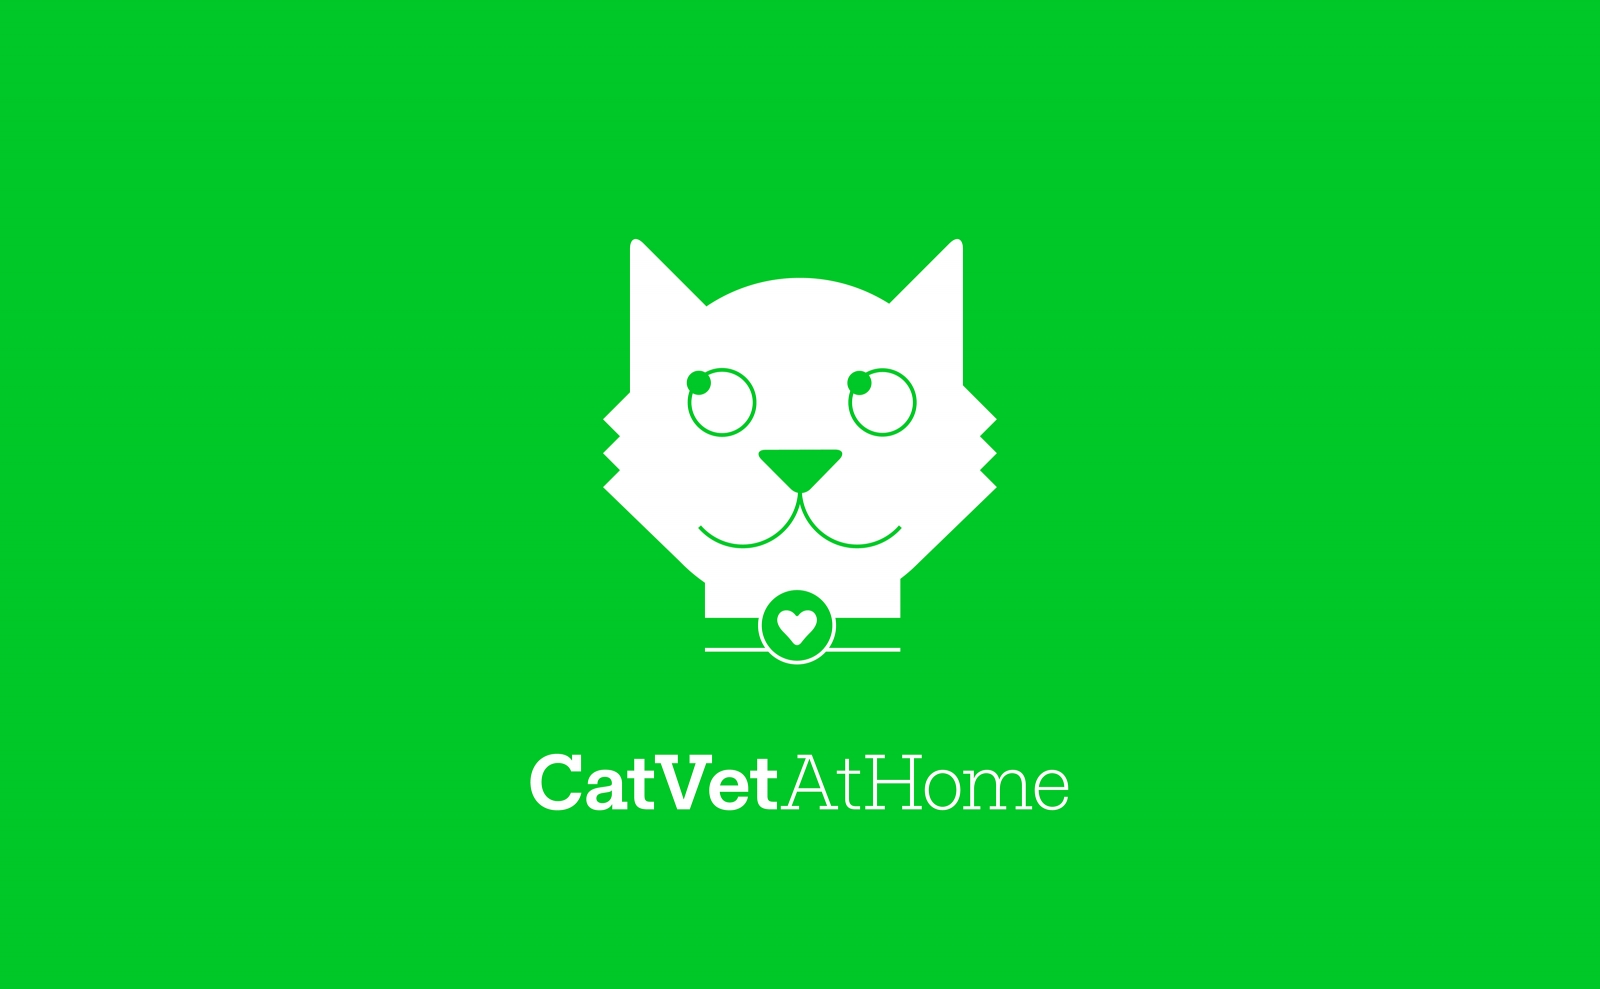 Cat Vet At Home logo design and illustration of a cat